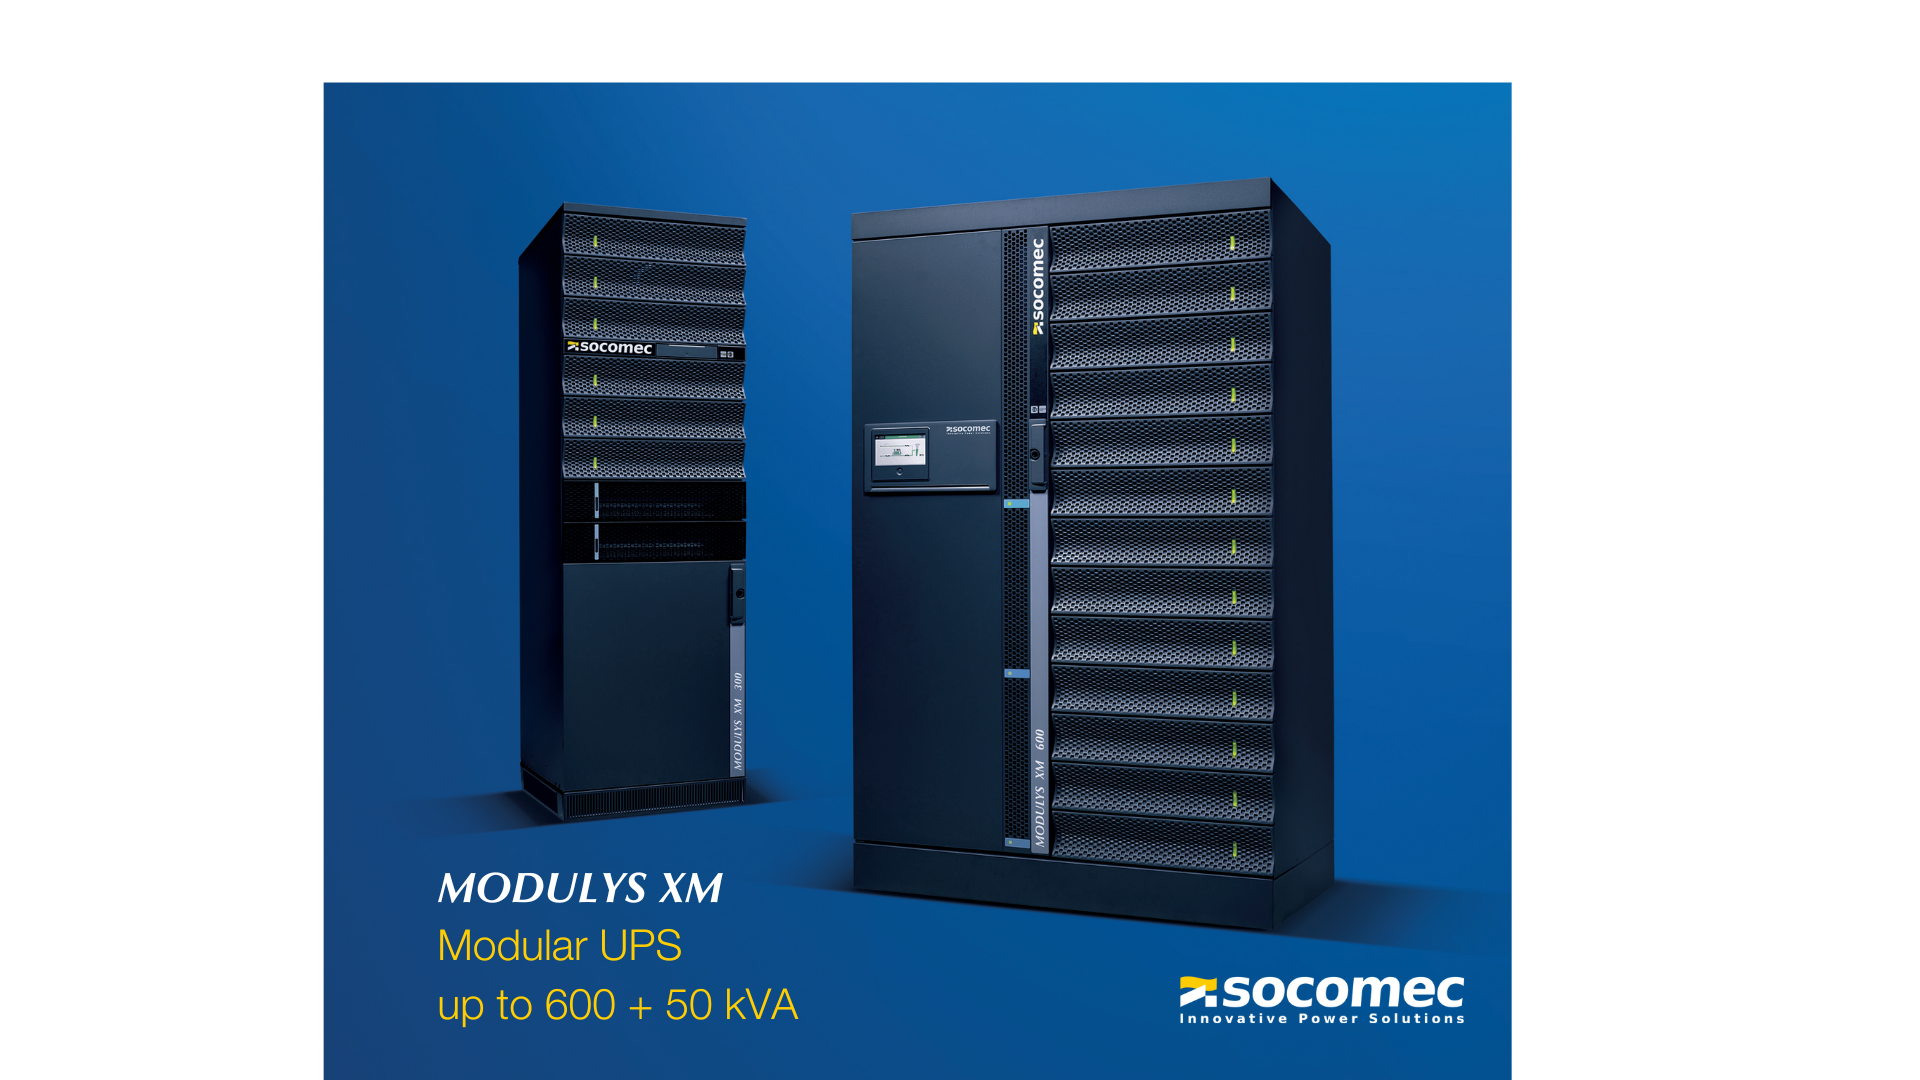 Socomec India launches medium power modular UPS – MODULYS XM